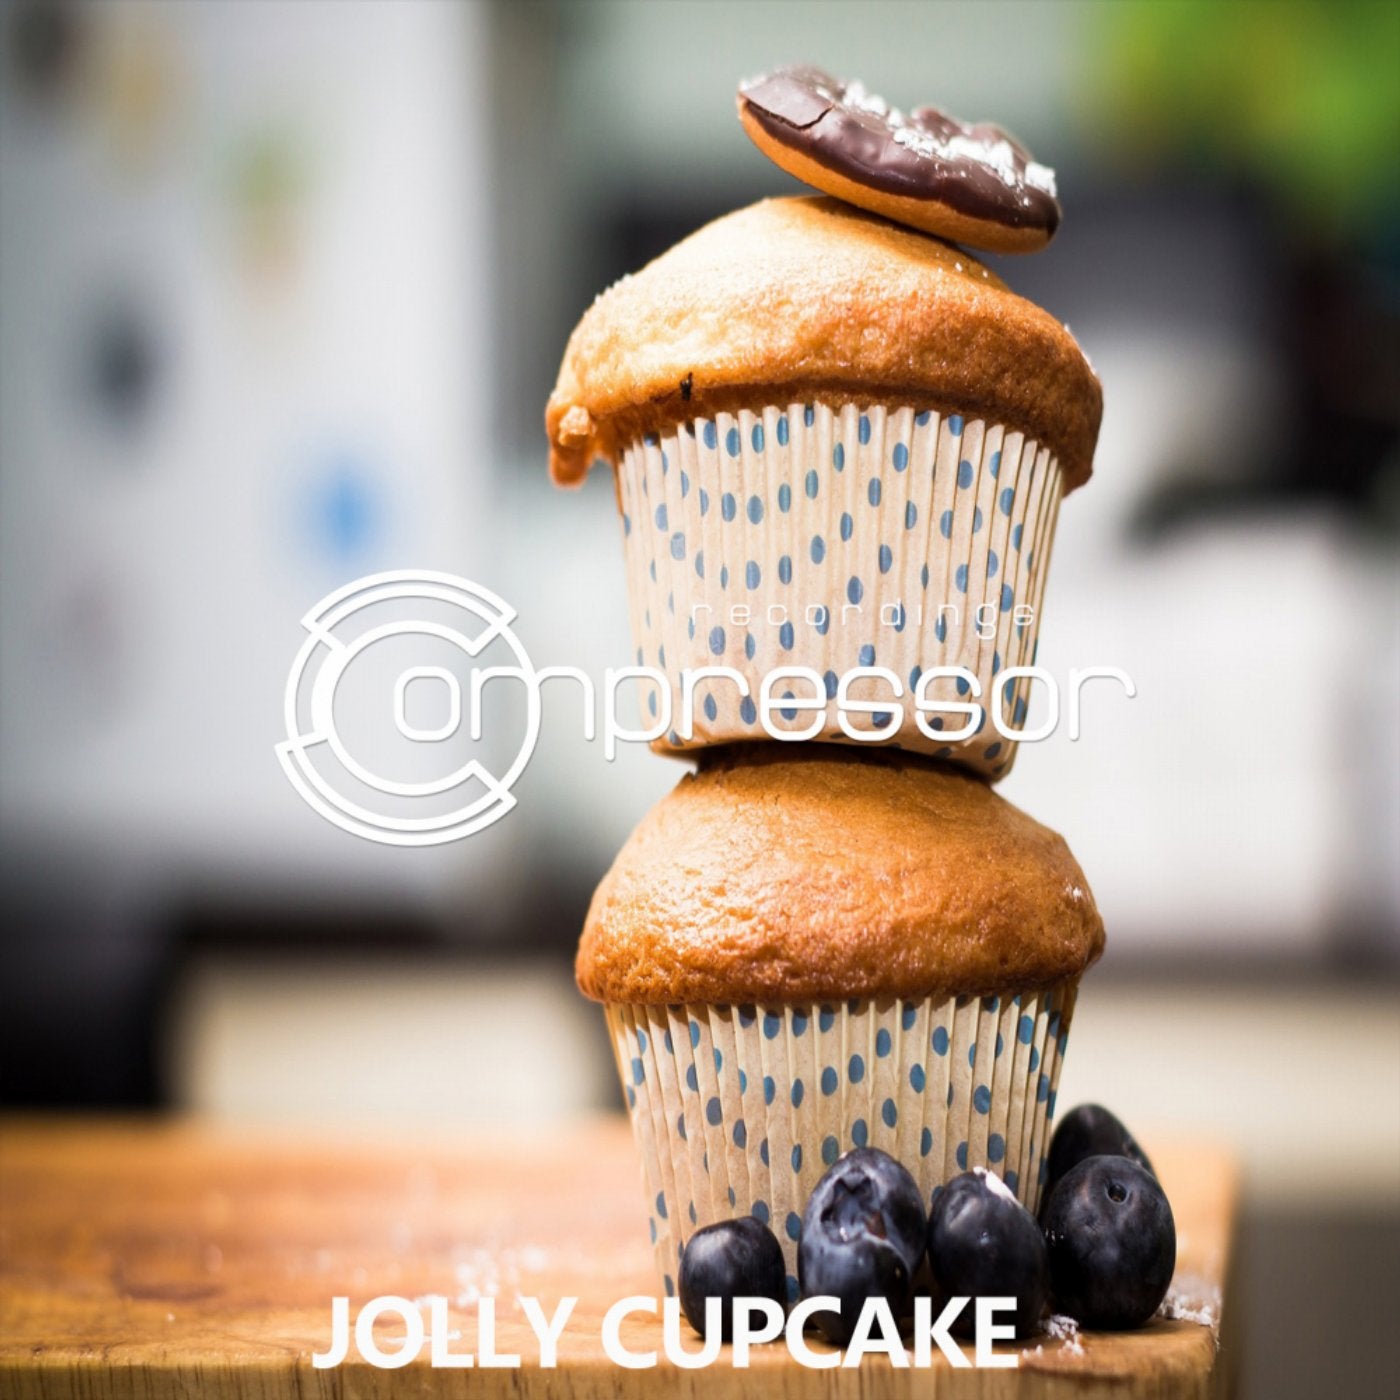 Jolly Cupcake